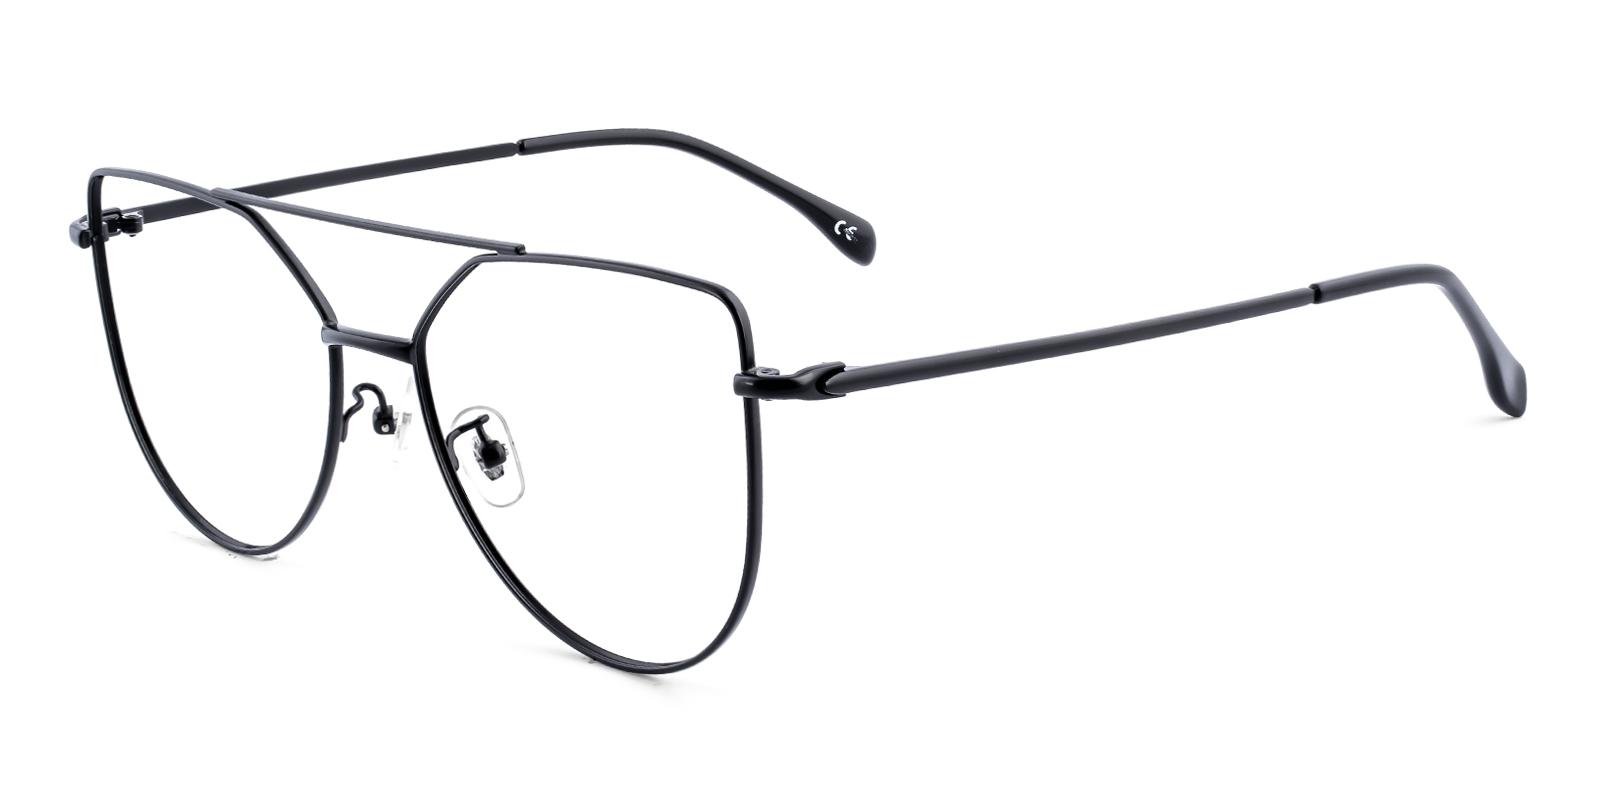 Opoit Black Metal Eyeglasses , NosePads Frames from ABBE Glasses